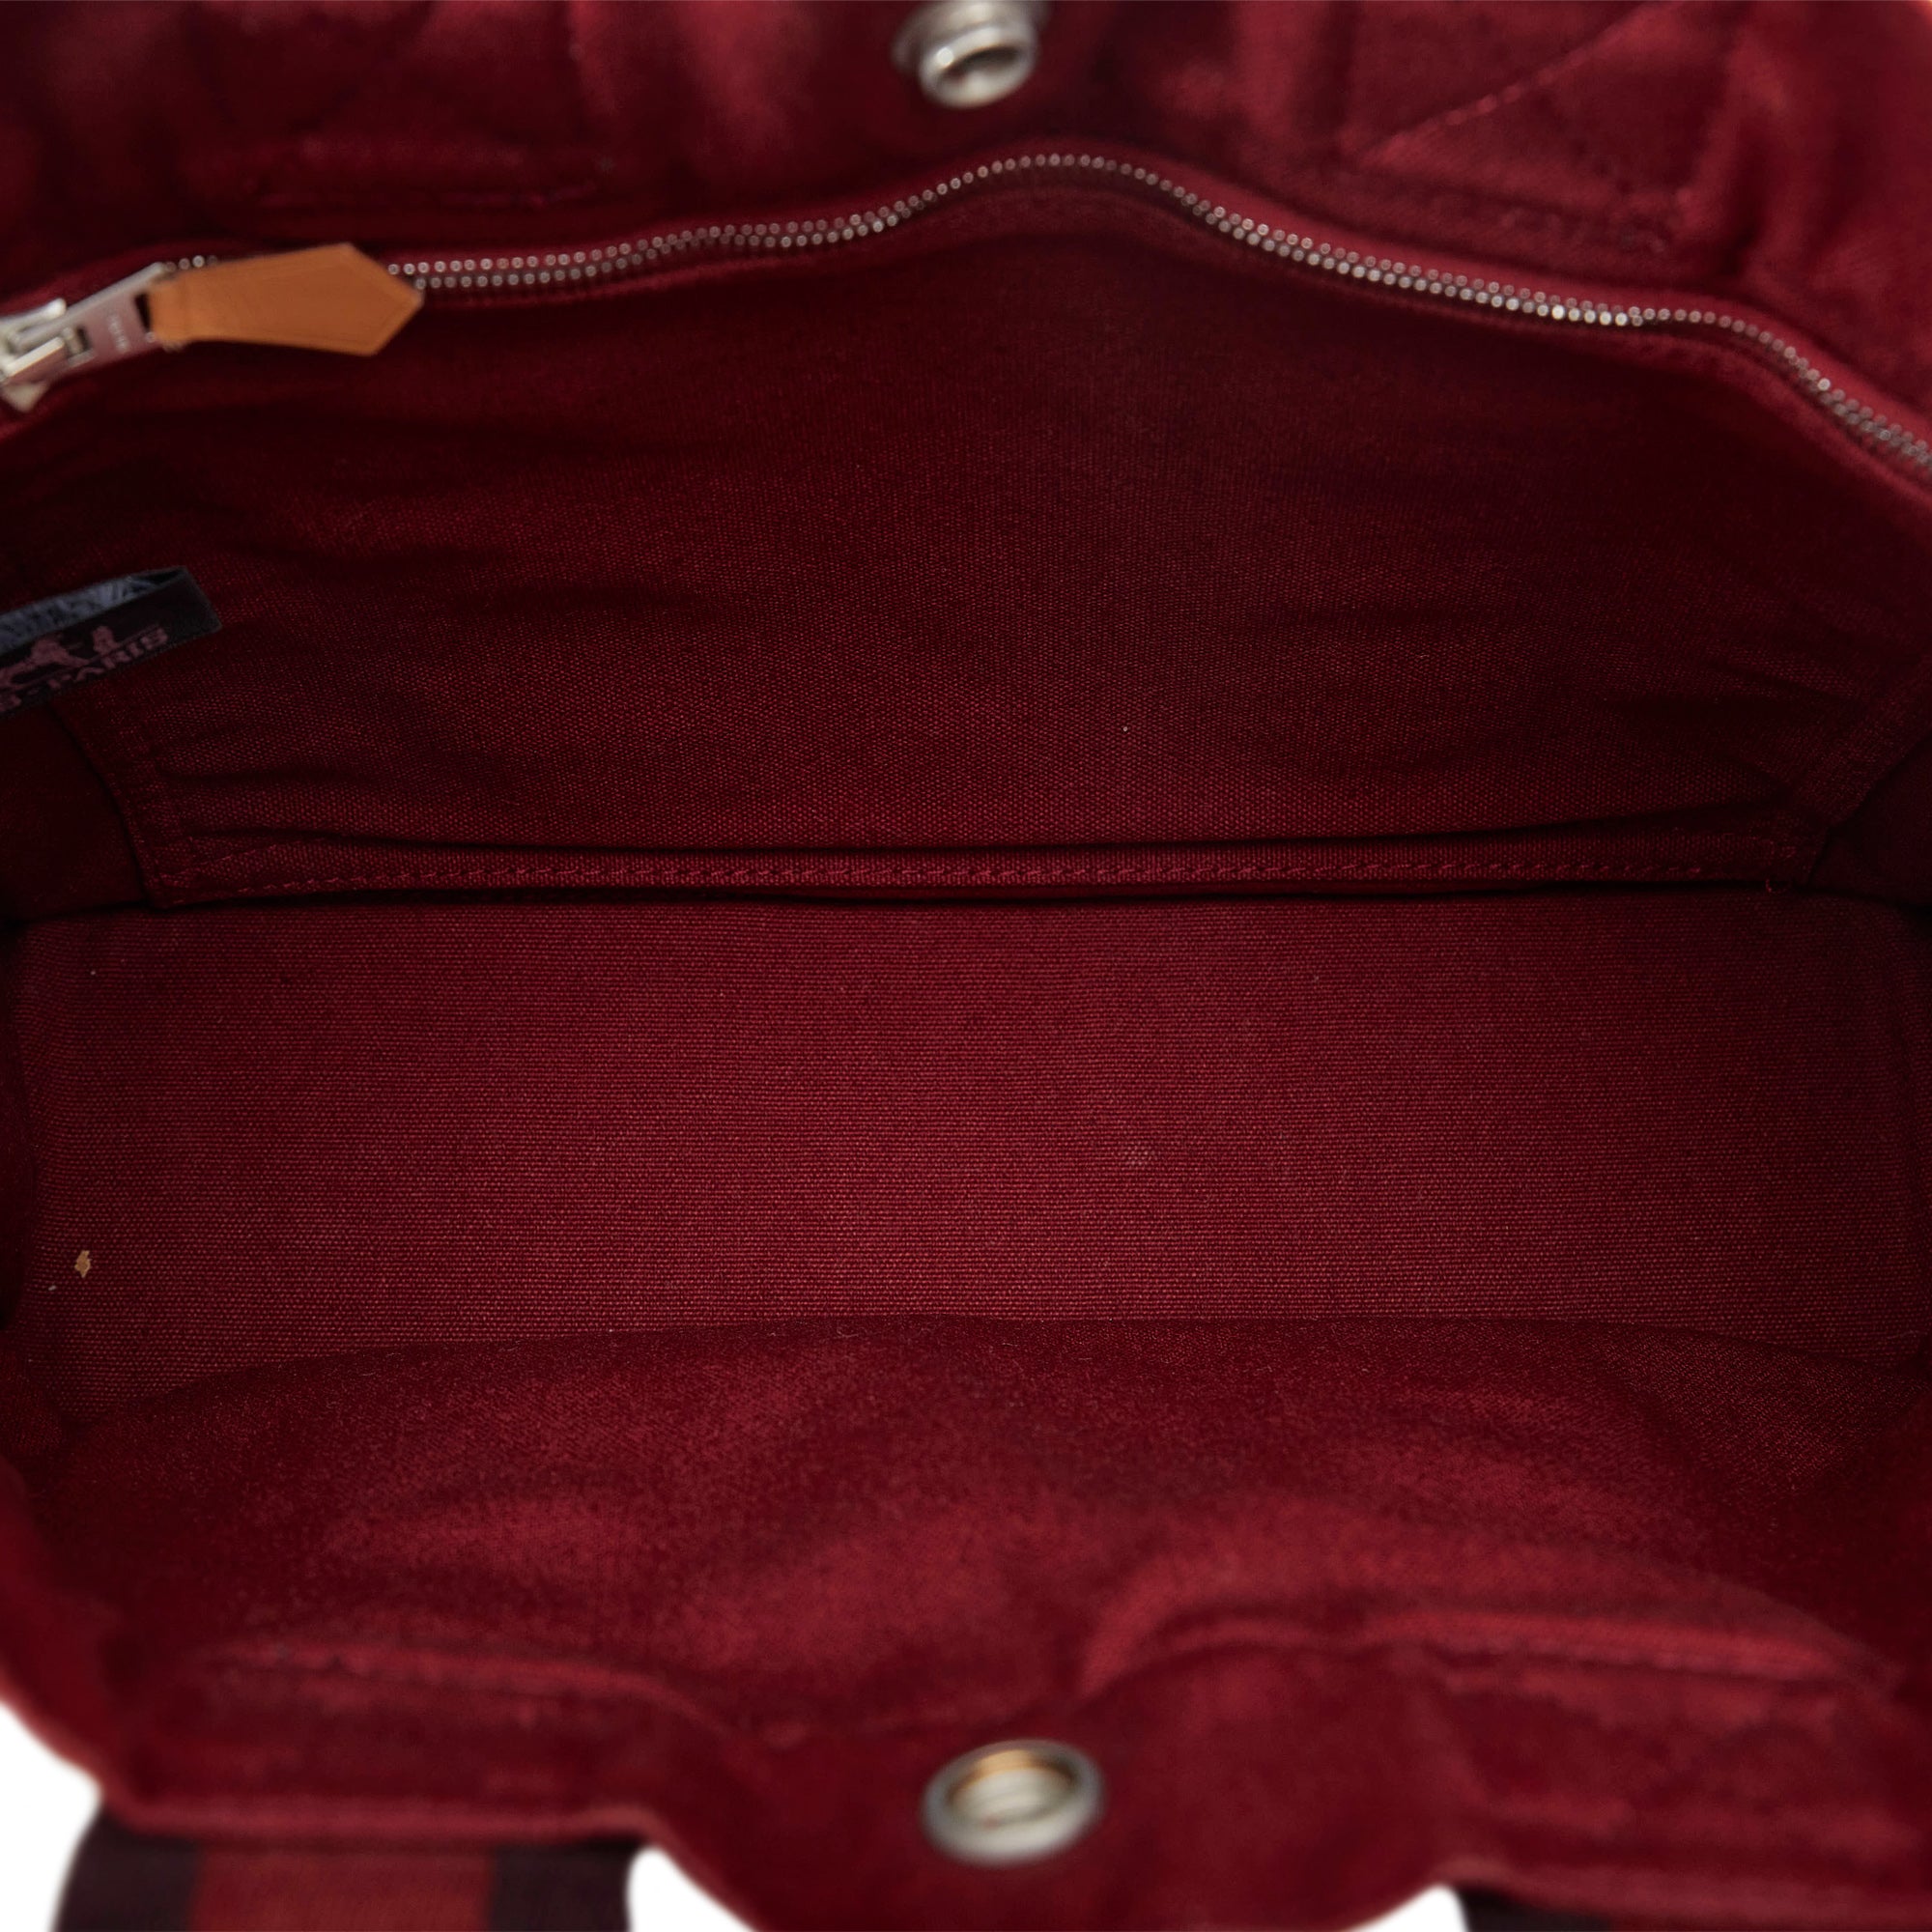 Red Hermes Fourre Tout PM Handbag